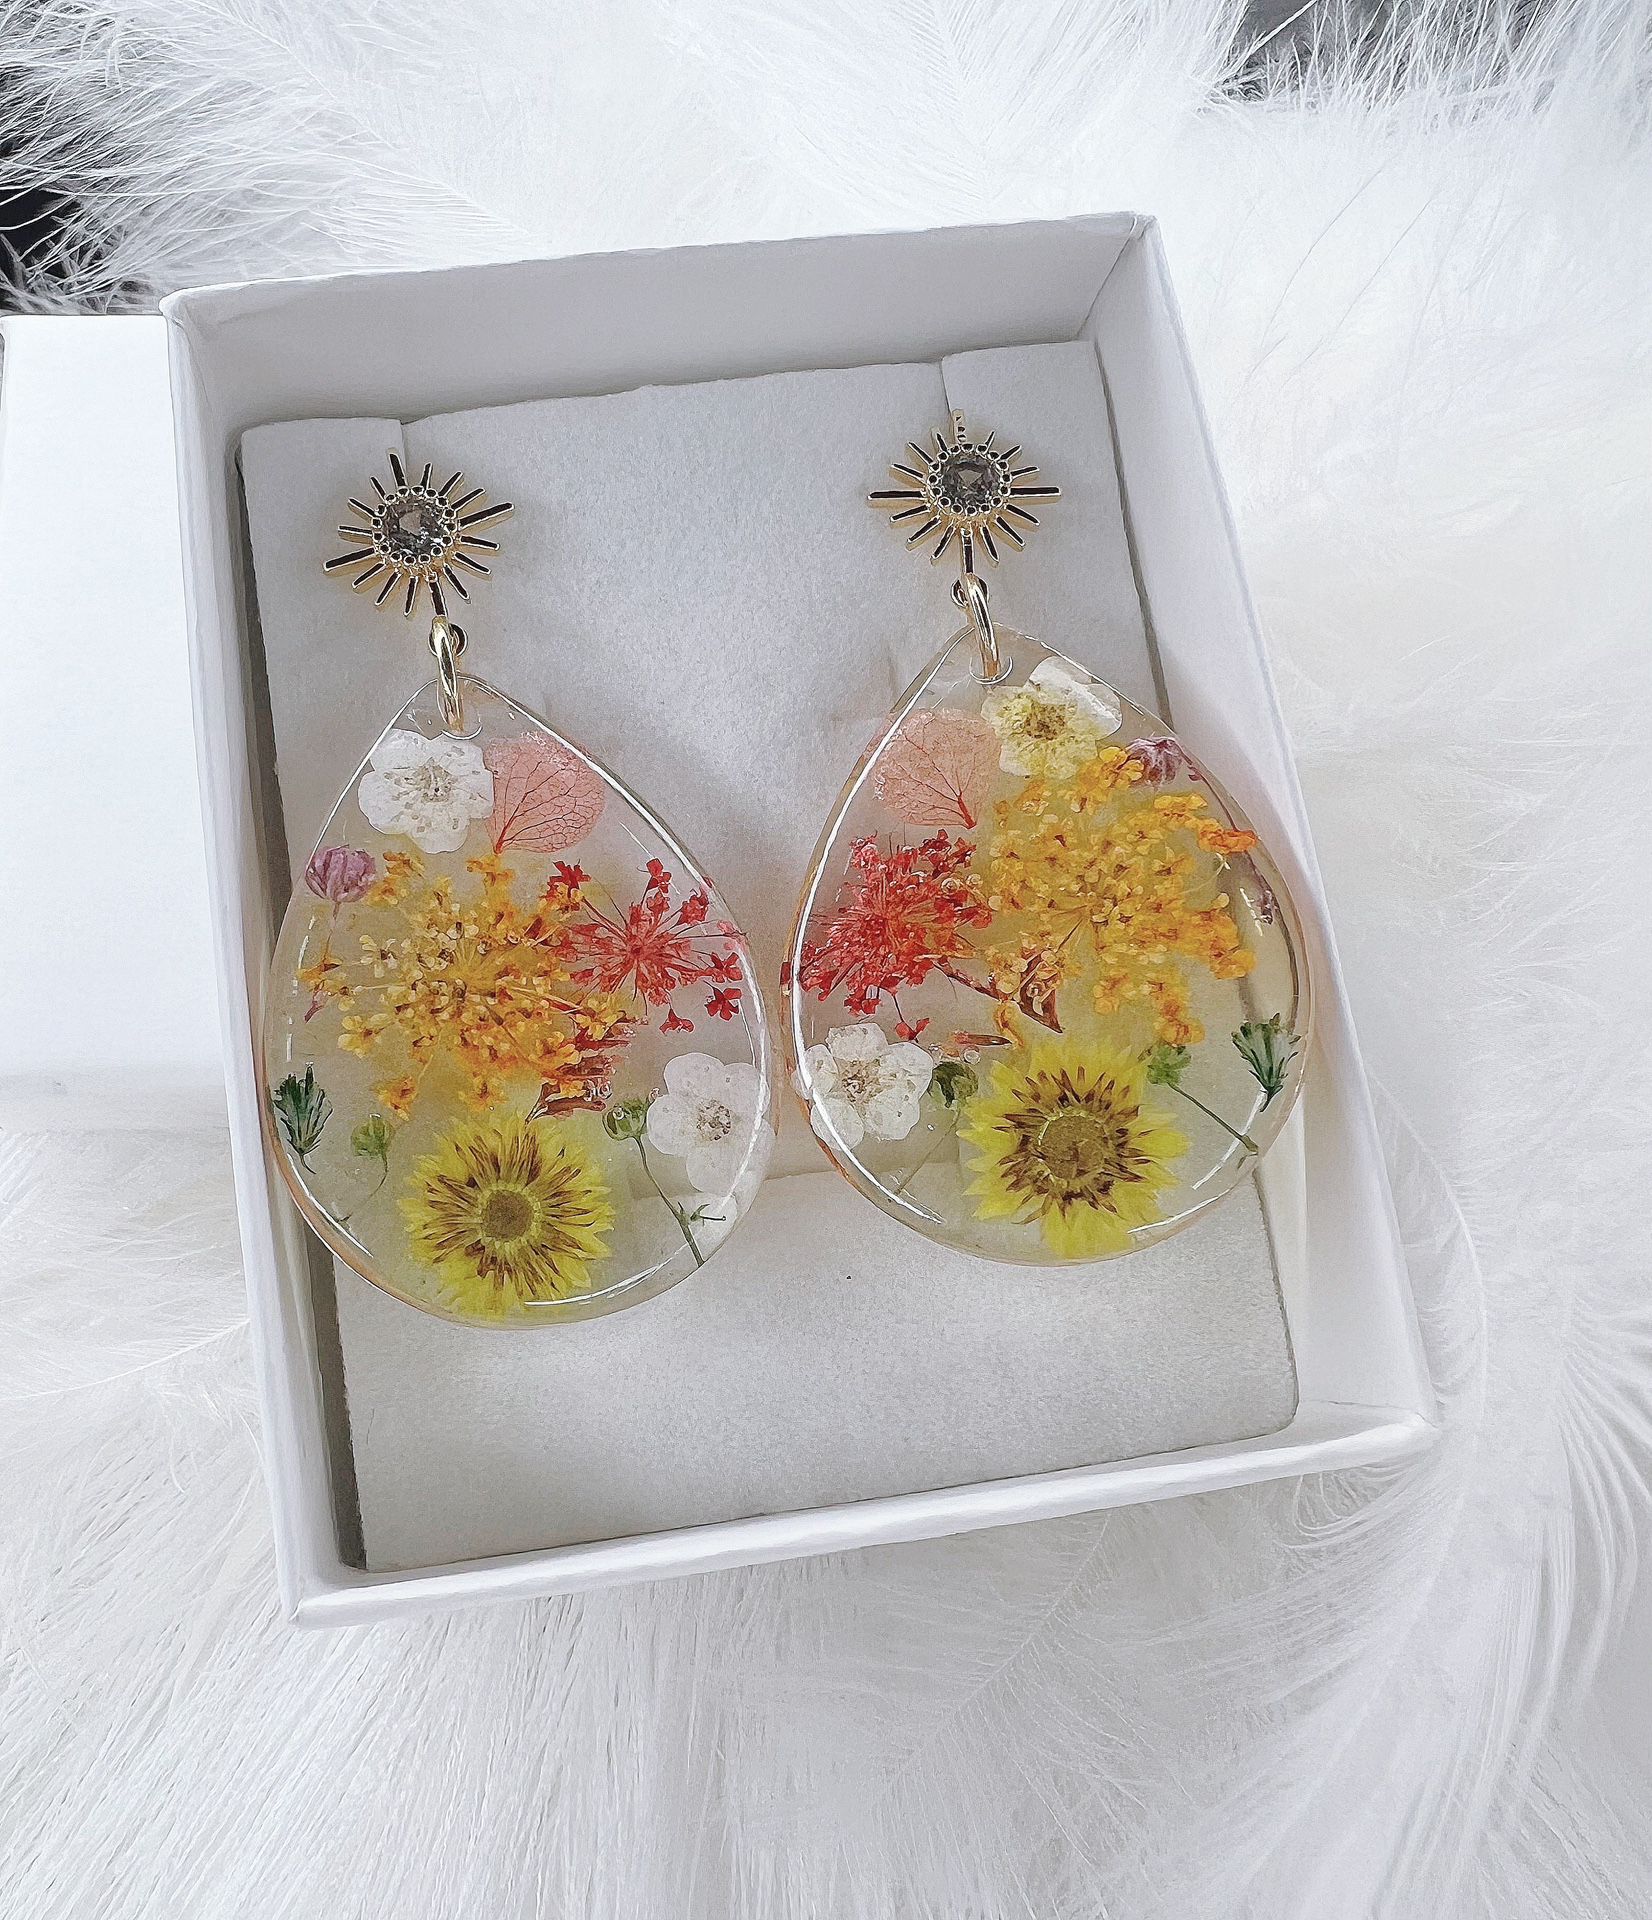 Multi-Flowers earrings 